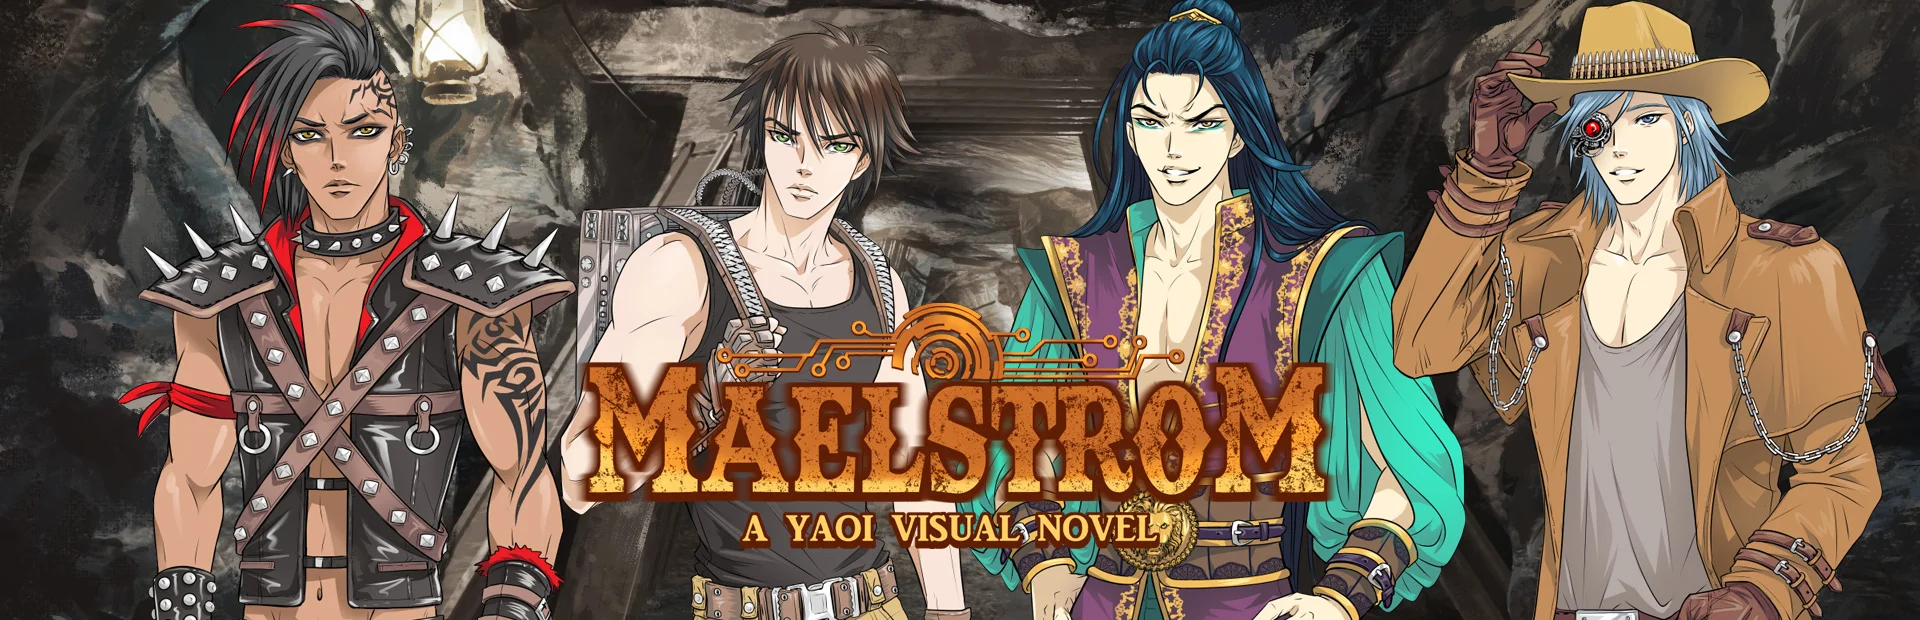 Download Maelstrom: A Yaoi Visual Novel